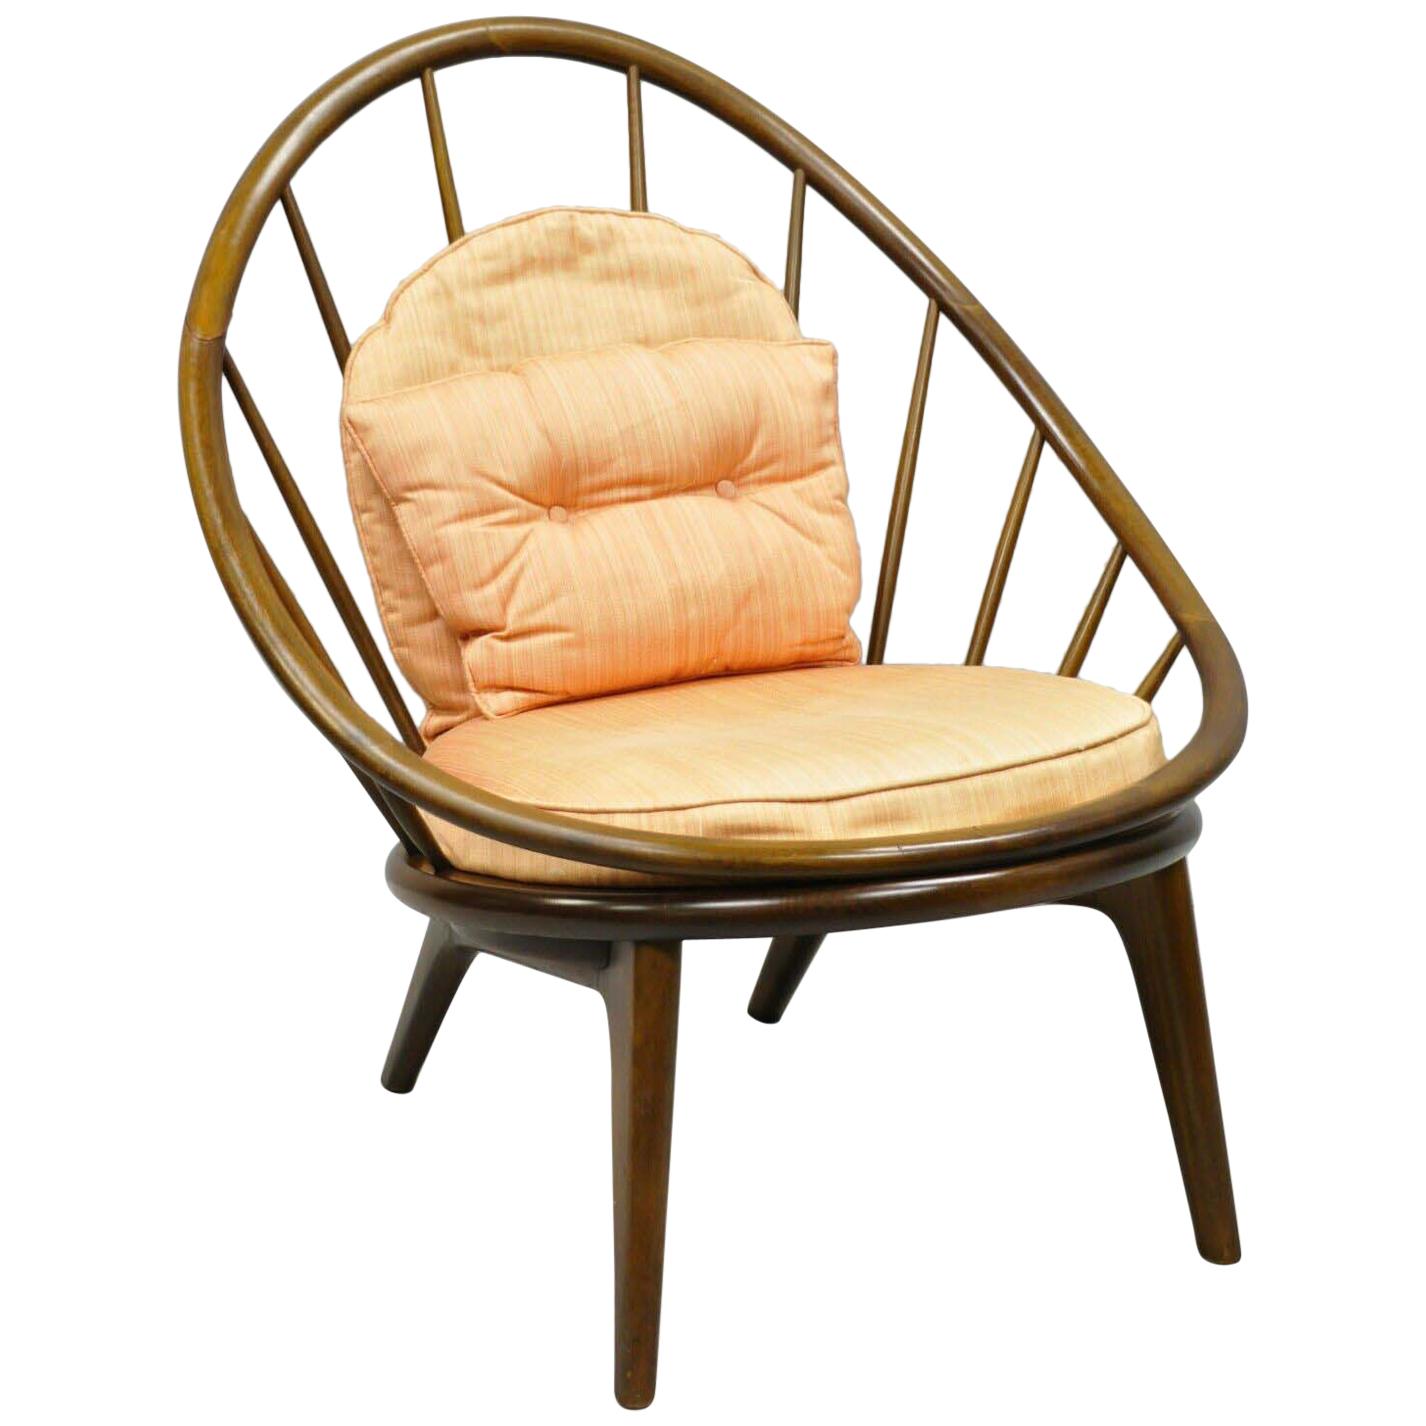 Ib Kofod-Larsen Selig fauteuil de salon moderne danois en noyer avec cerceau en forme de paon en vente